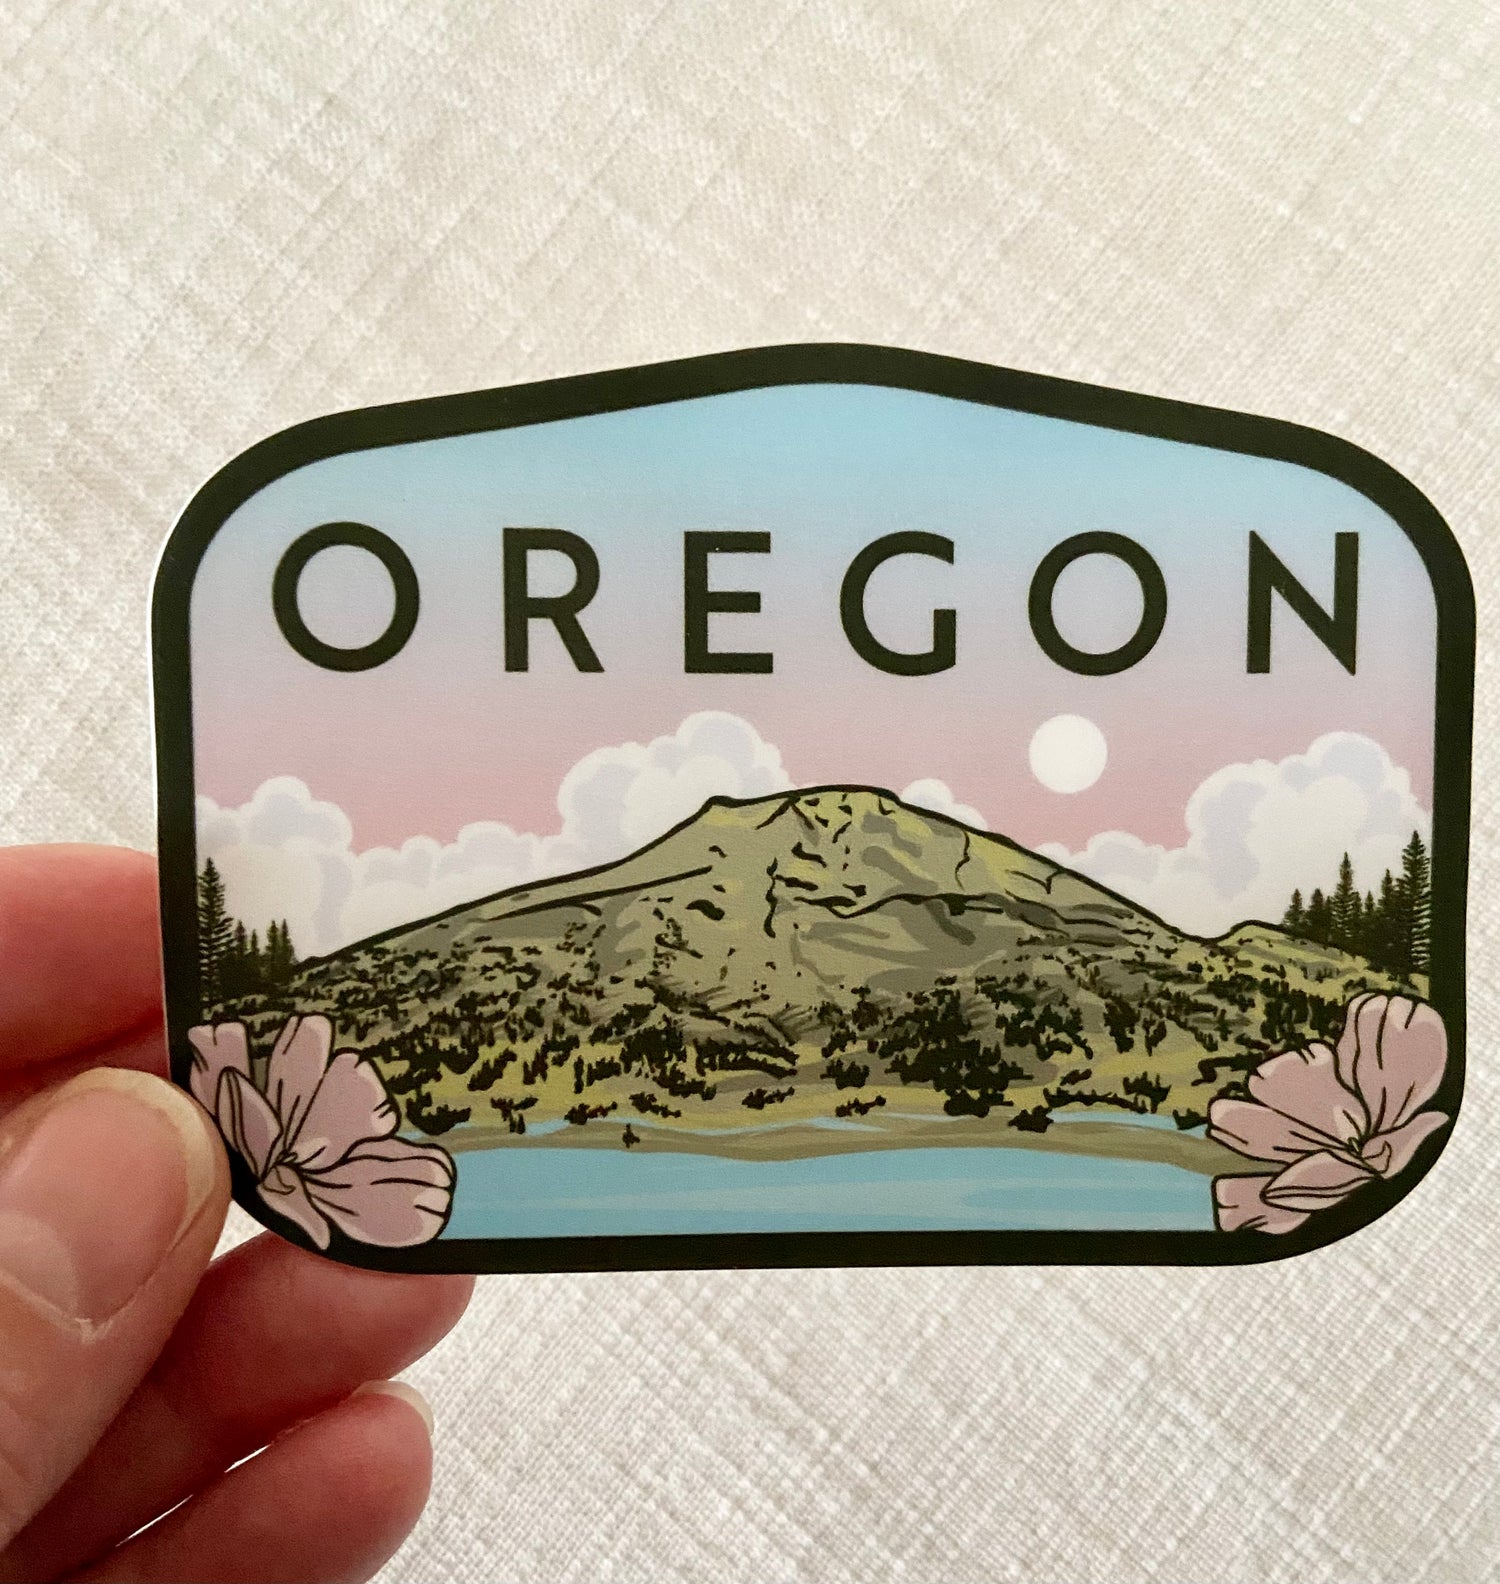 Oregon Mountain Landscape - Vinyl Sticker